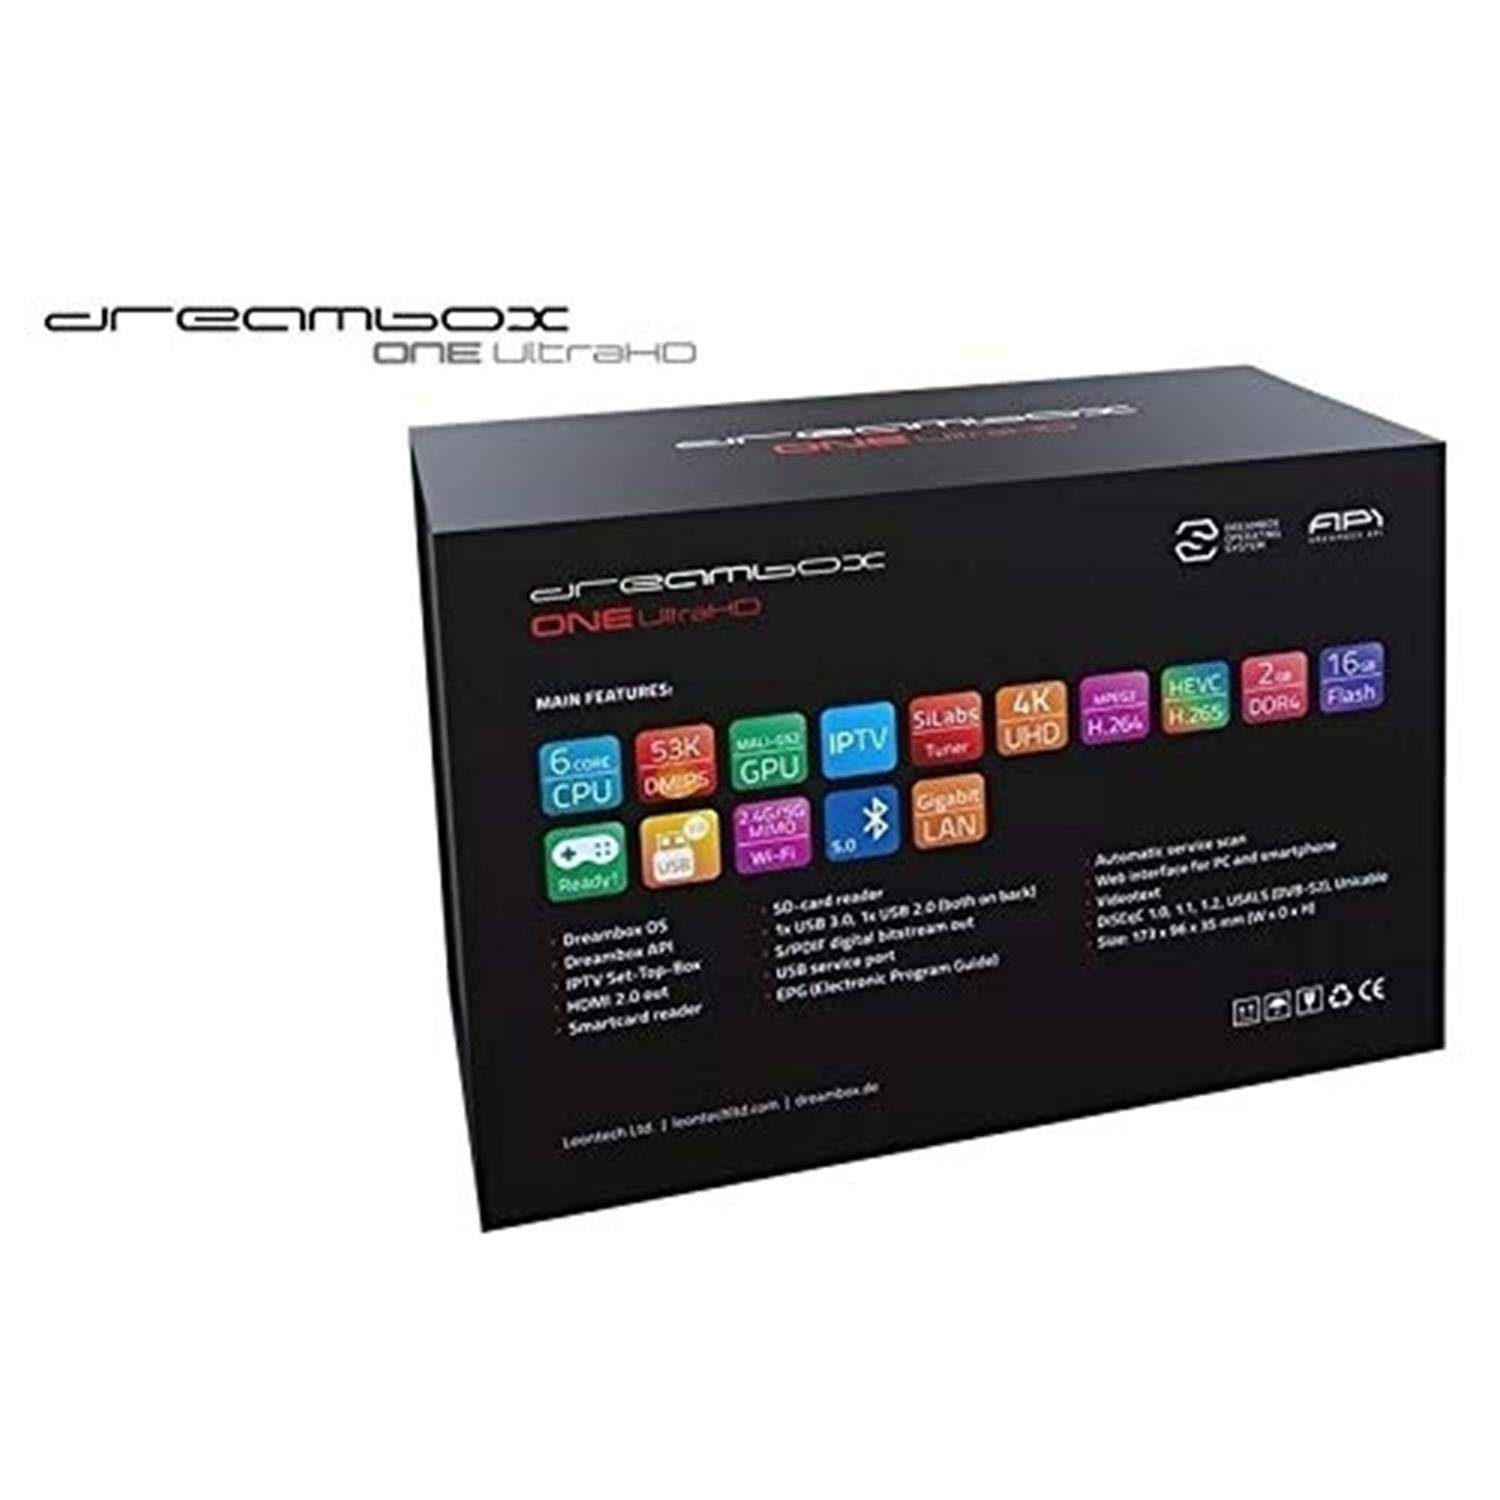 Dreambox Dreambox One Ultra HD DVB-S2X (4K, E2 2x Multistream 2160p, Satellitenreceiver Tuner